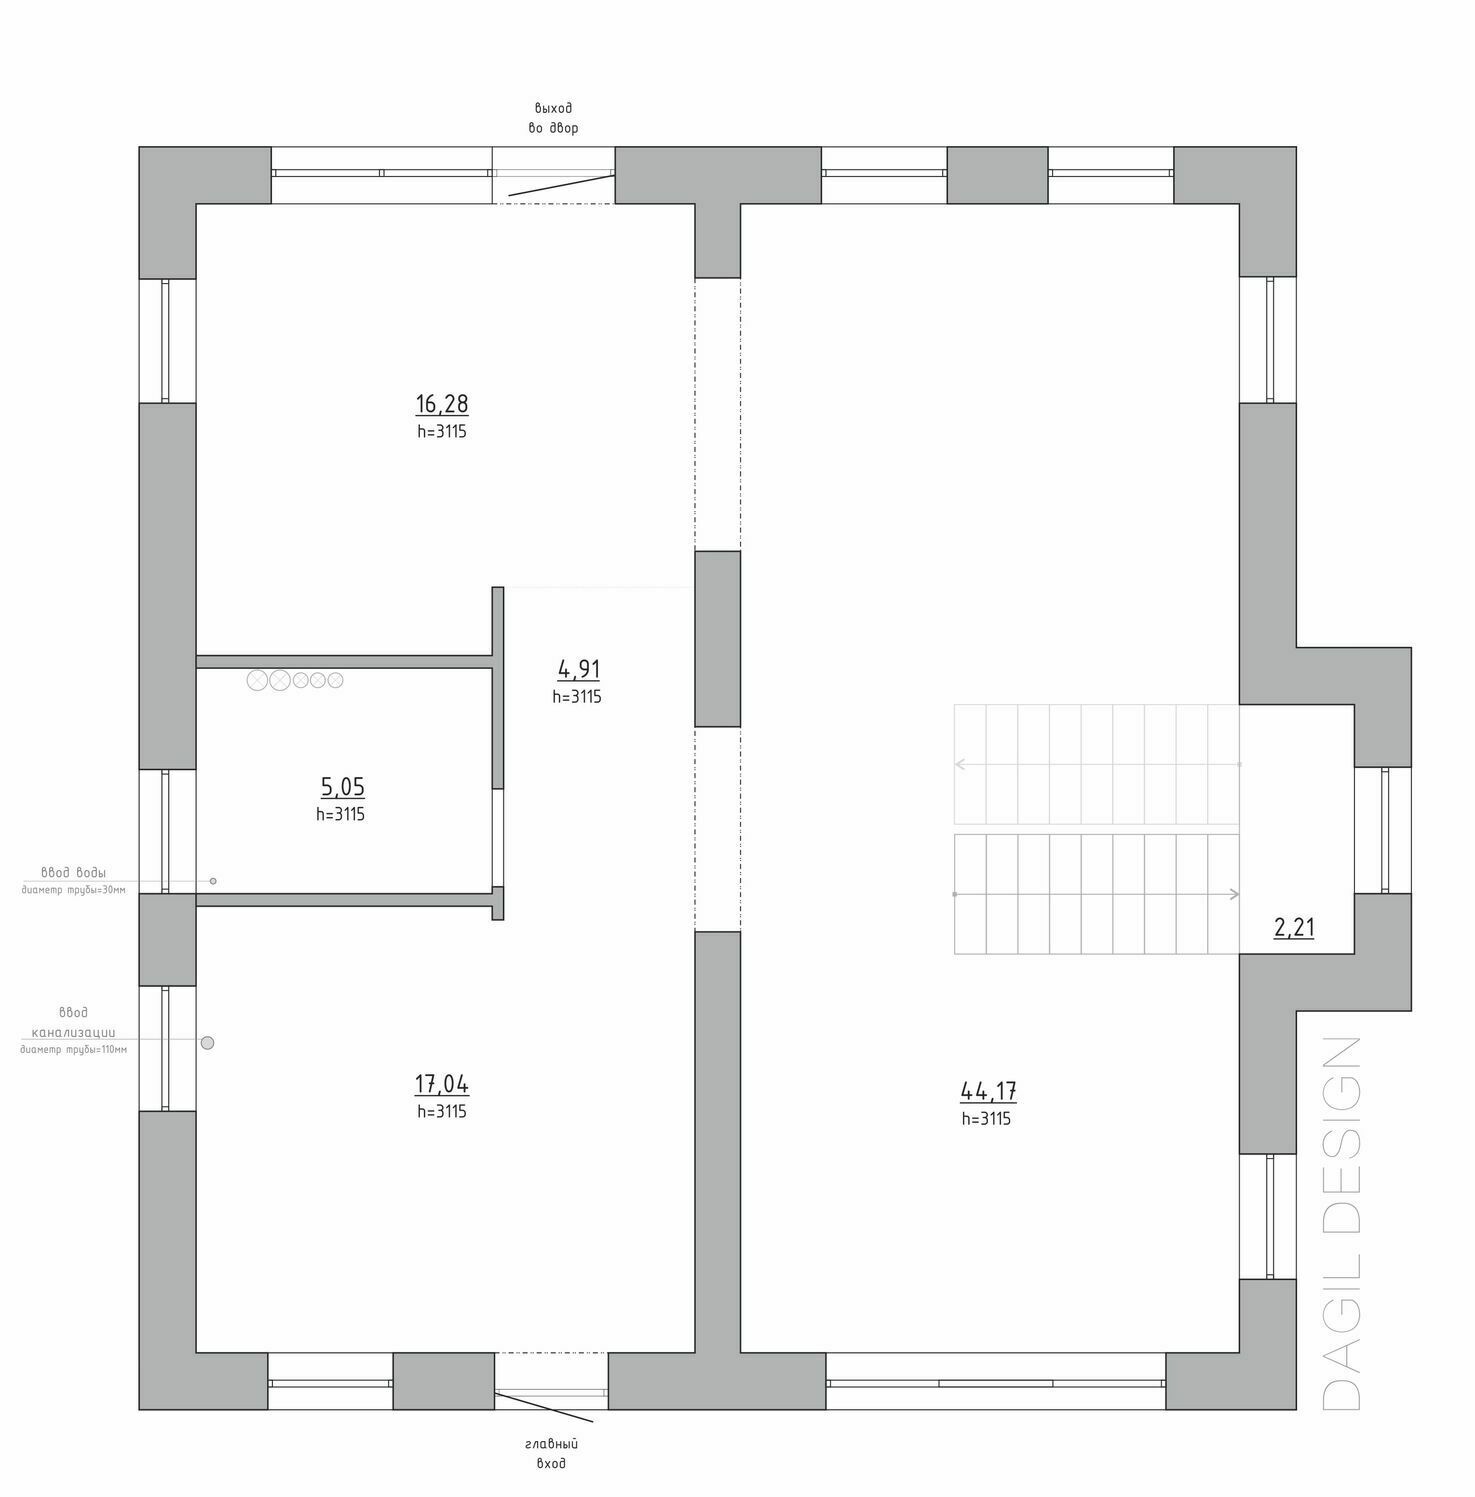 план дома 1 этаж